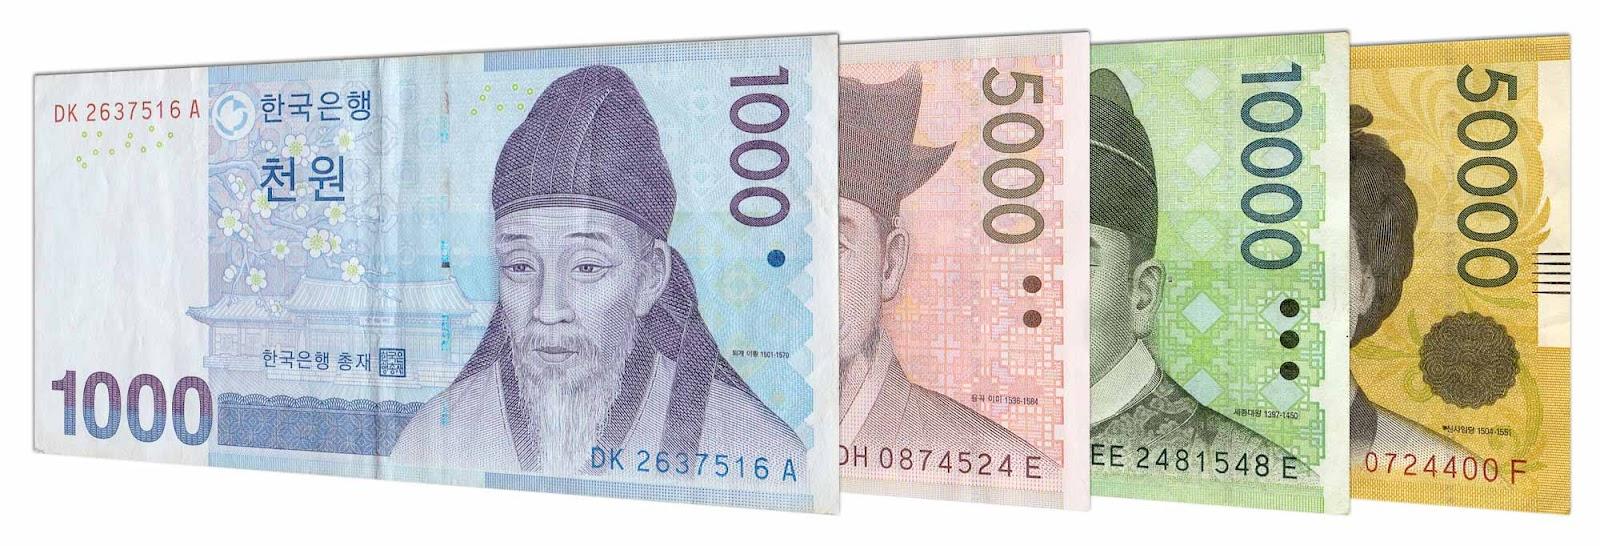 South Korean Won banknote series 